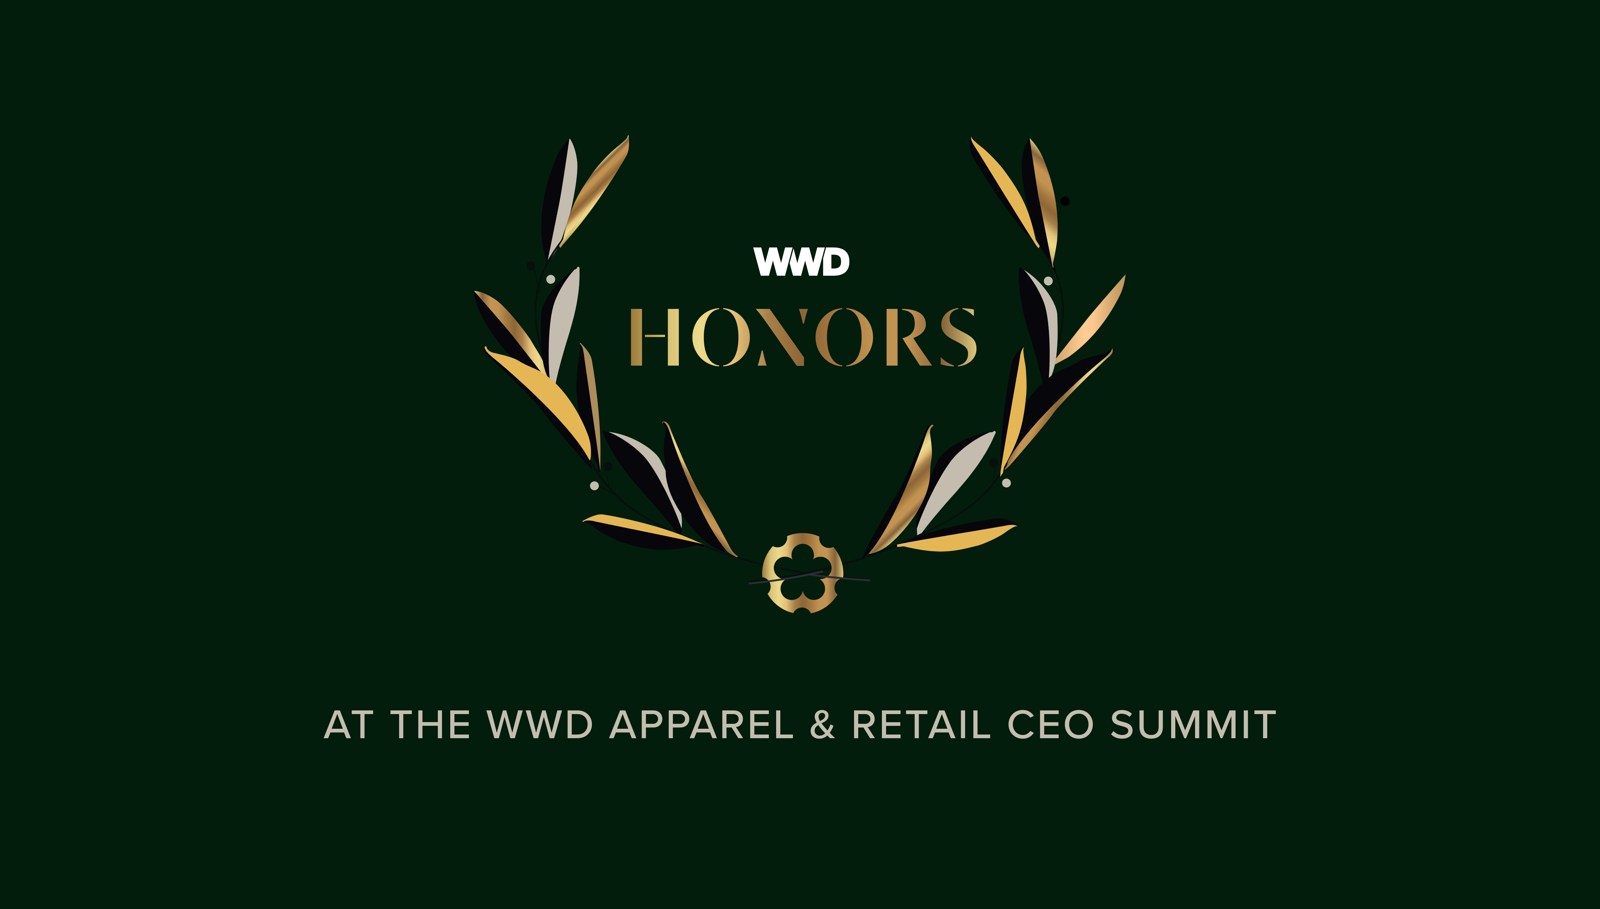 WWD Gave an Award to Louis Vuitton's Michael Burke for Creative